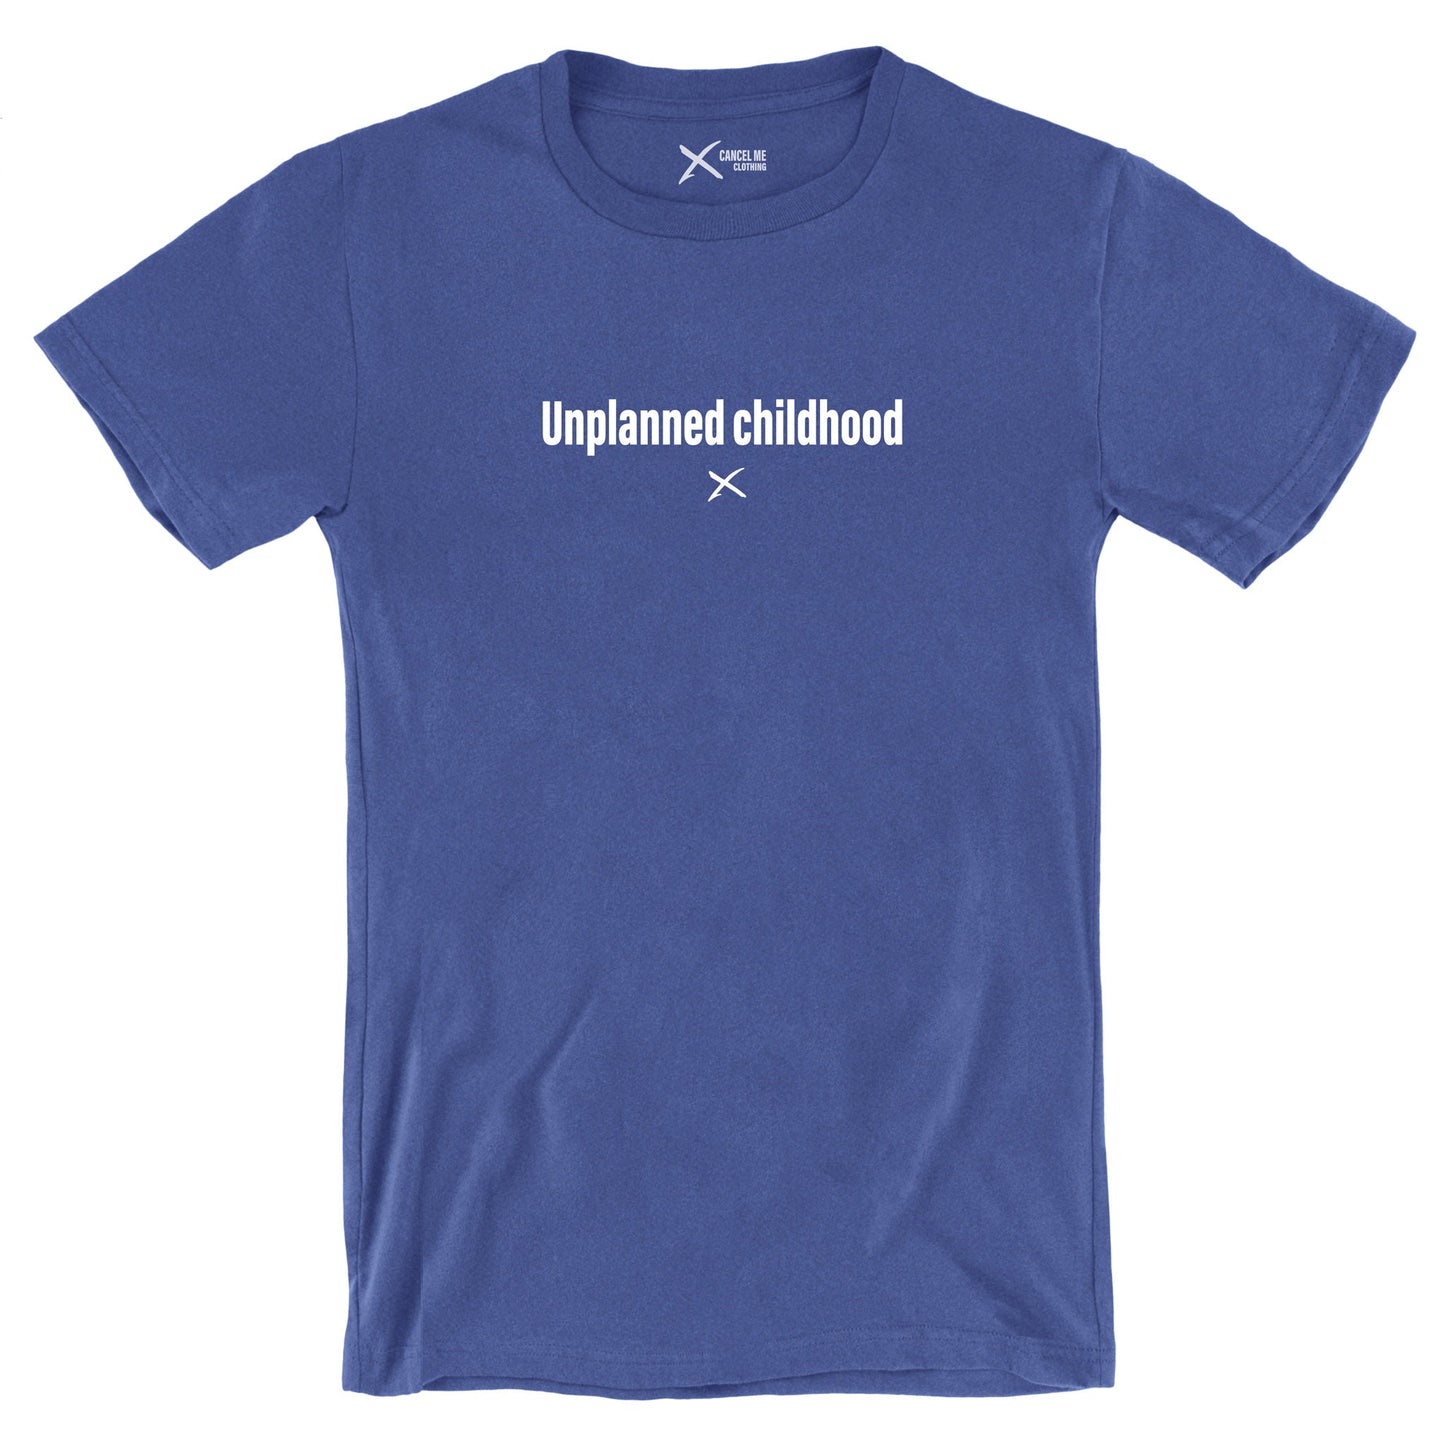 Unplanned childhood - Shirt